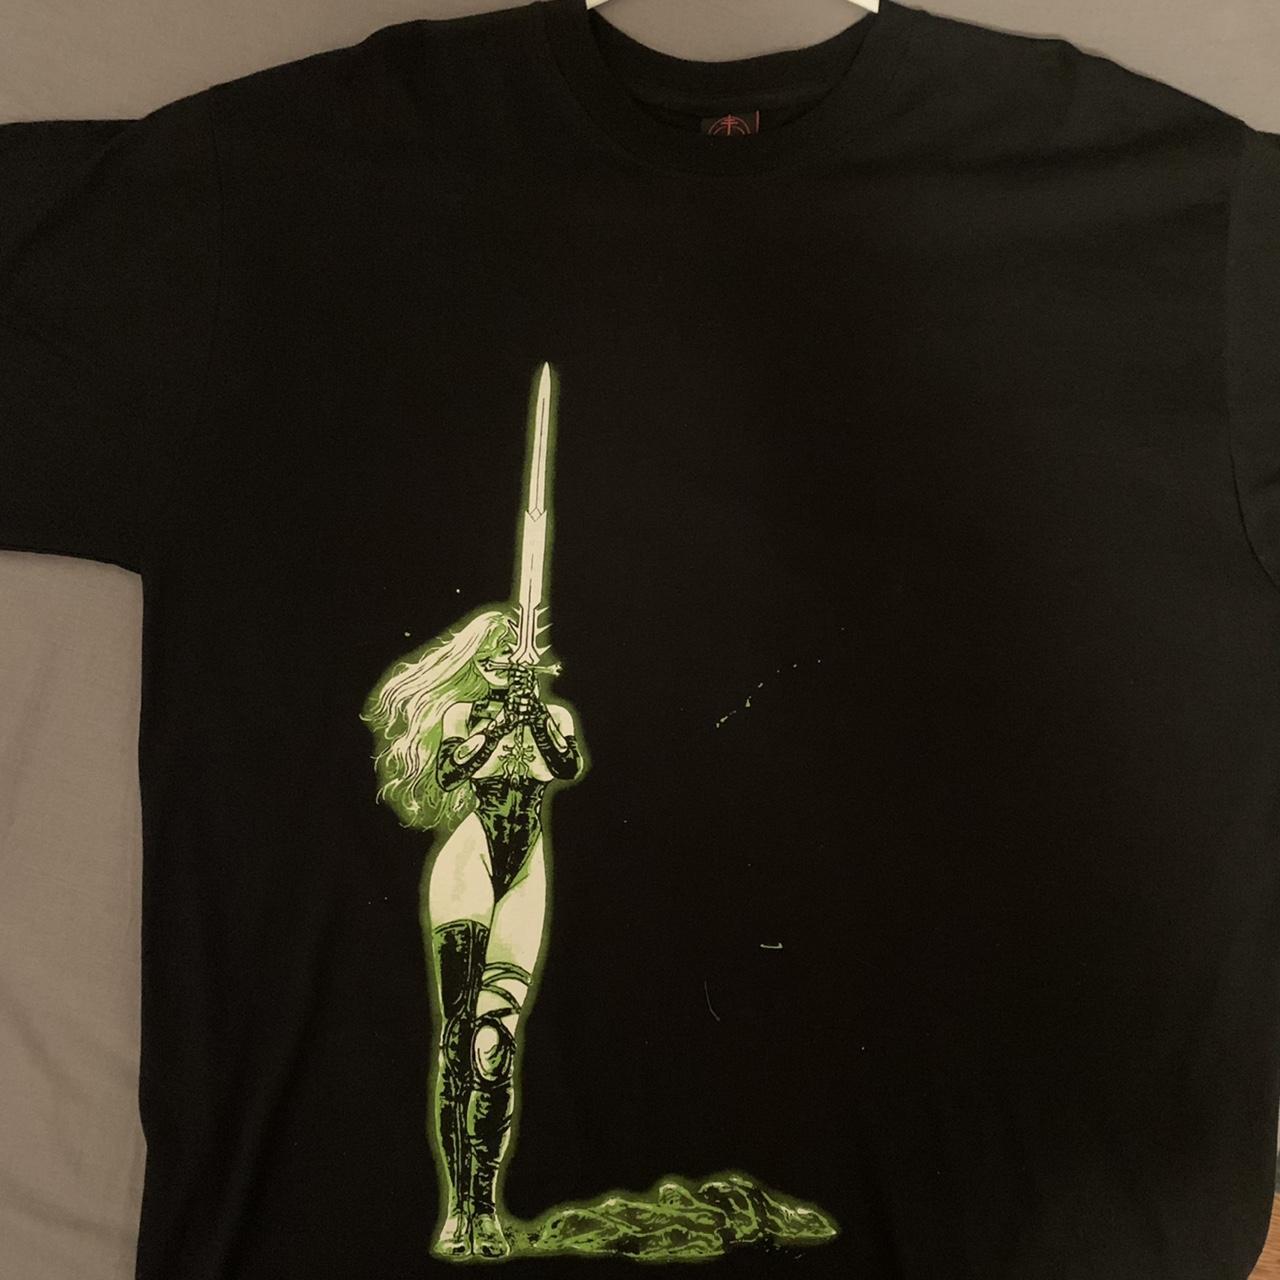 Dropdead Men's Black and Green T-shirt